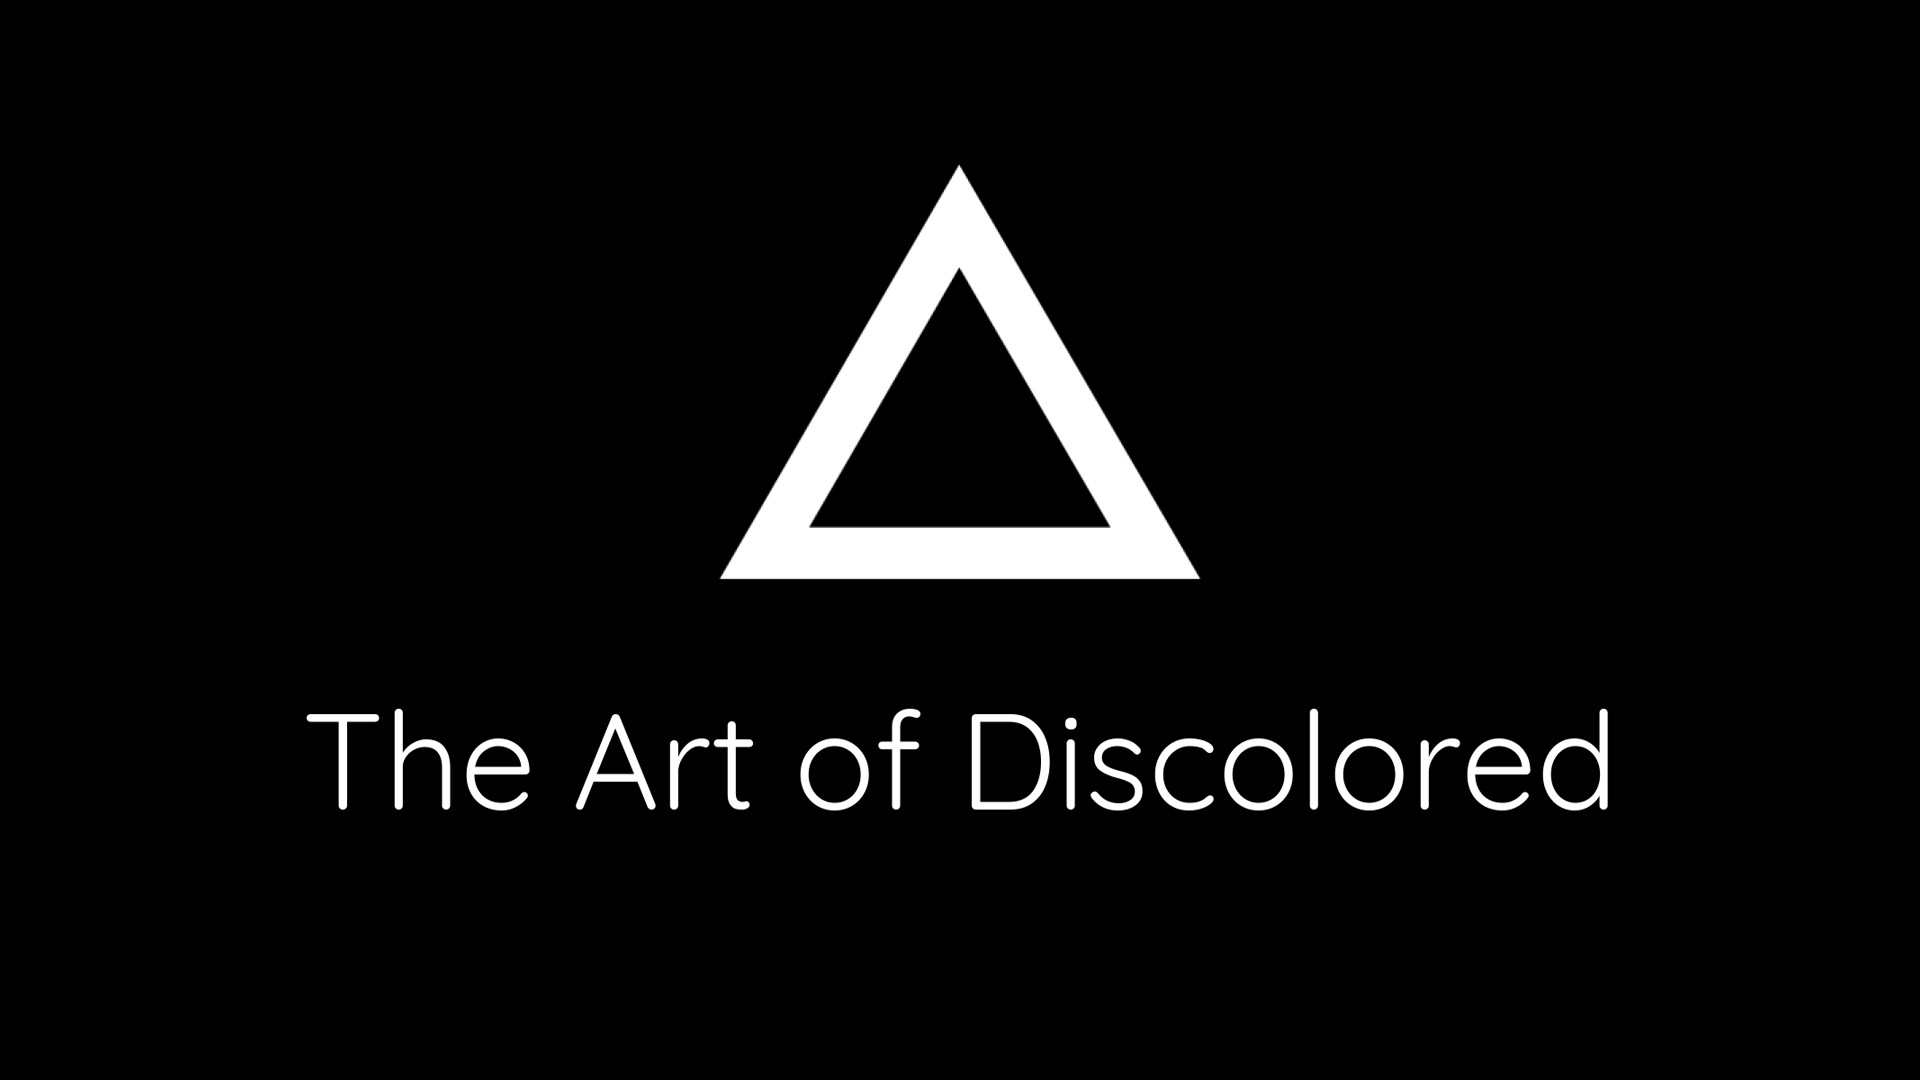 Art of Discolored - Digital Art Book Featured Screenshot #1